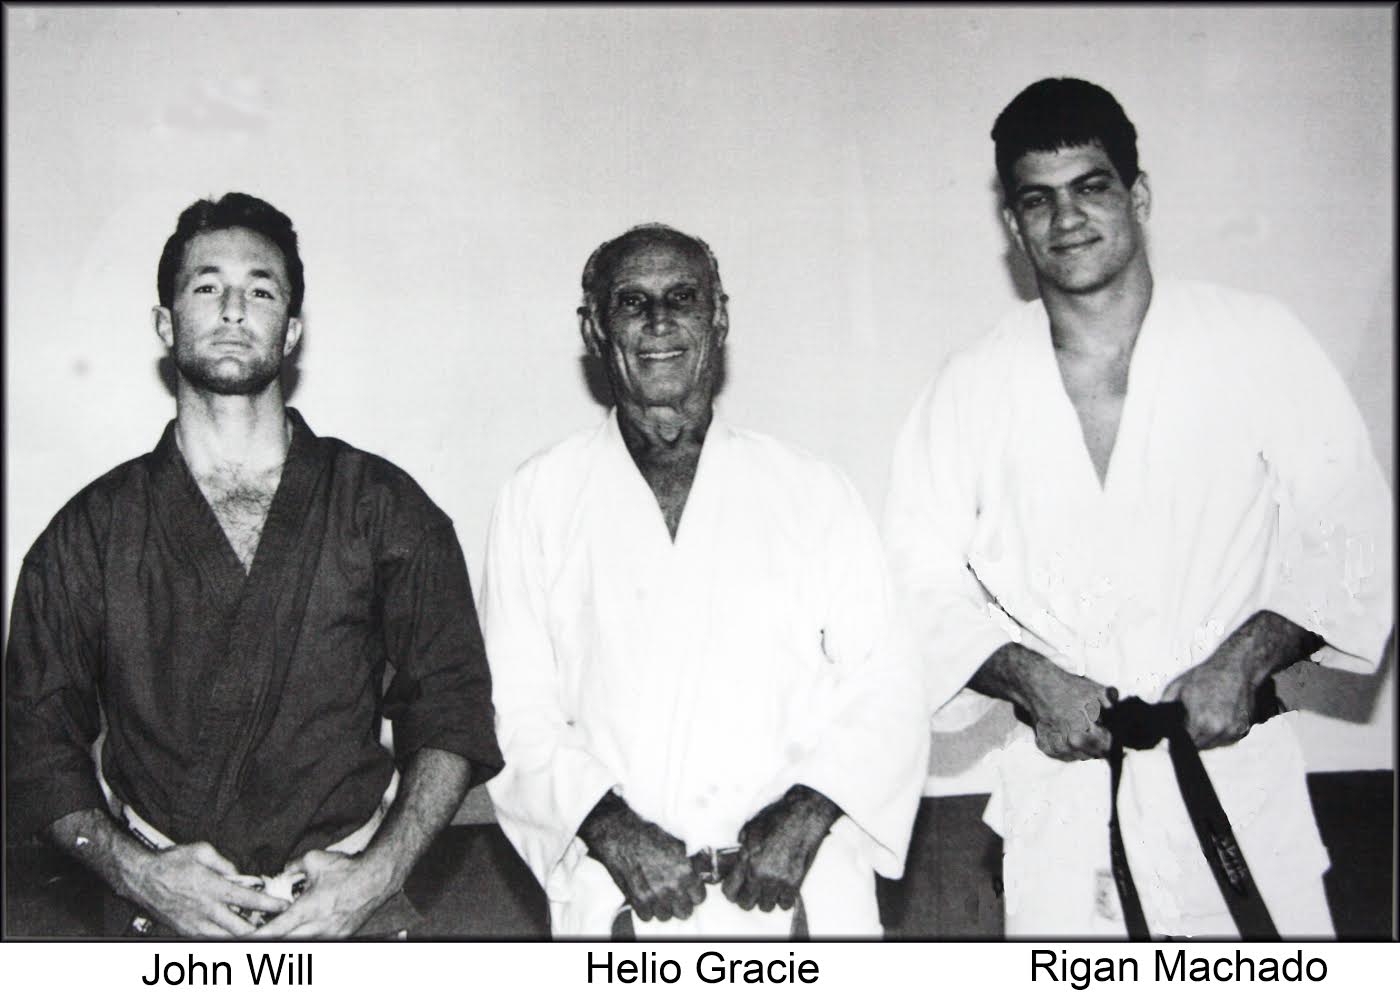 Artemis BJJ Brazilian Jiu Jitsu Bristol interview with John Will, pictured with Helio and Rigan